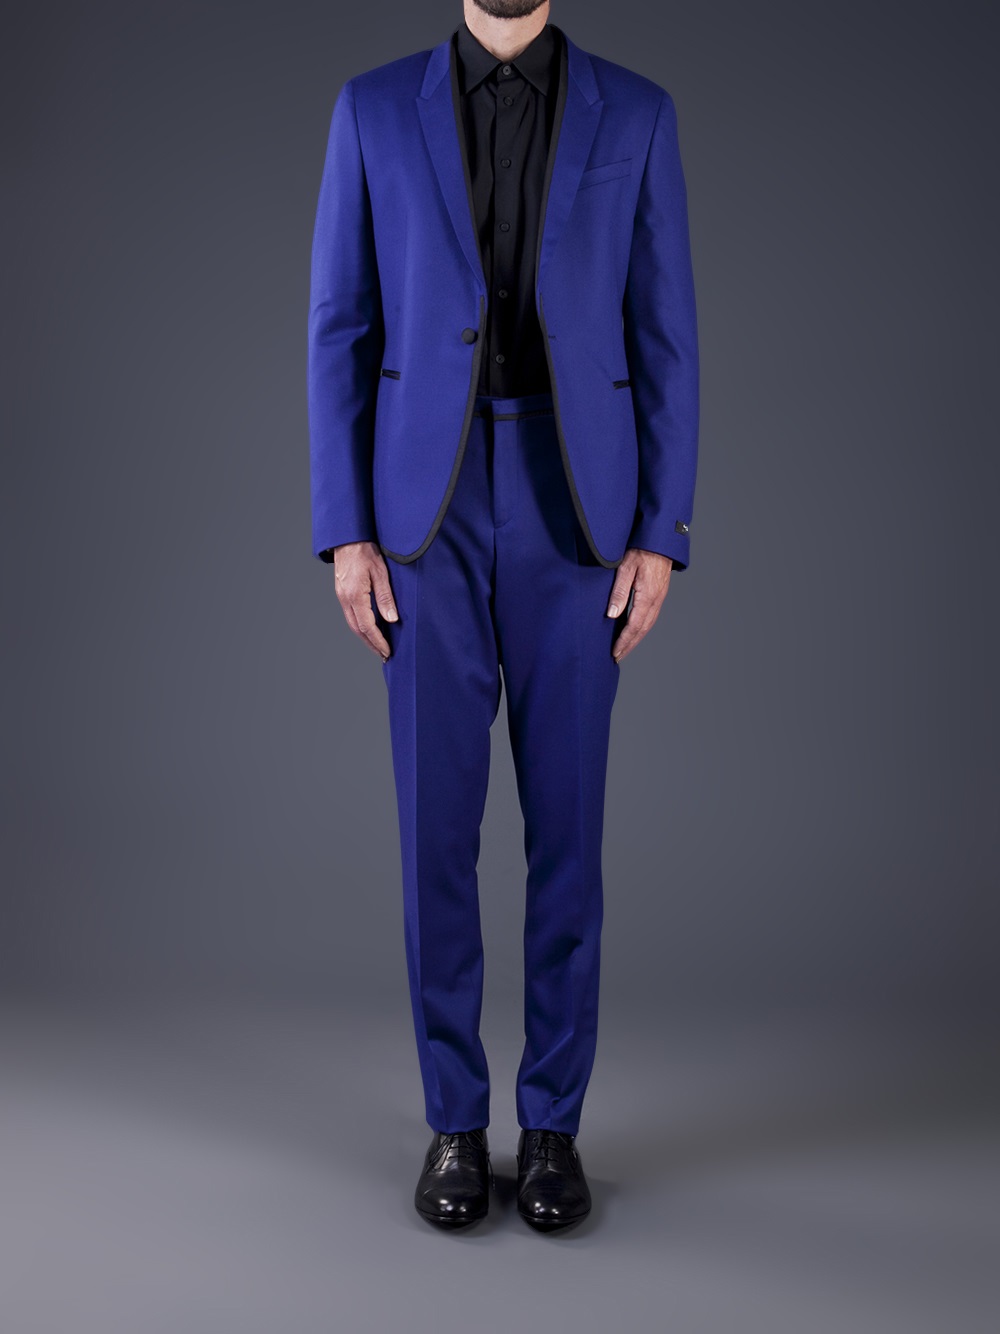 Paul Smith Paul Smith Wool Suit in Blue for Men - Lyst